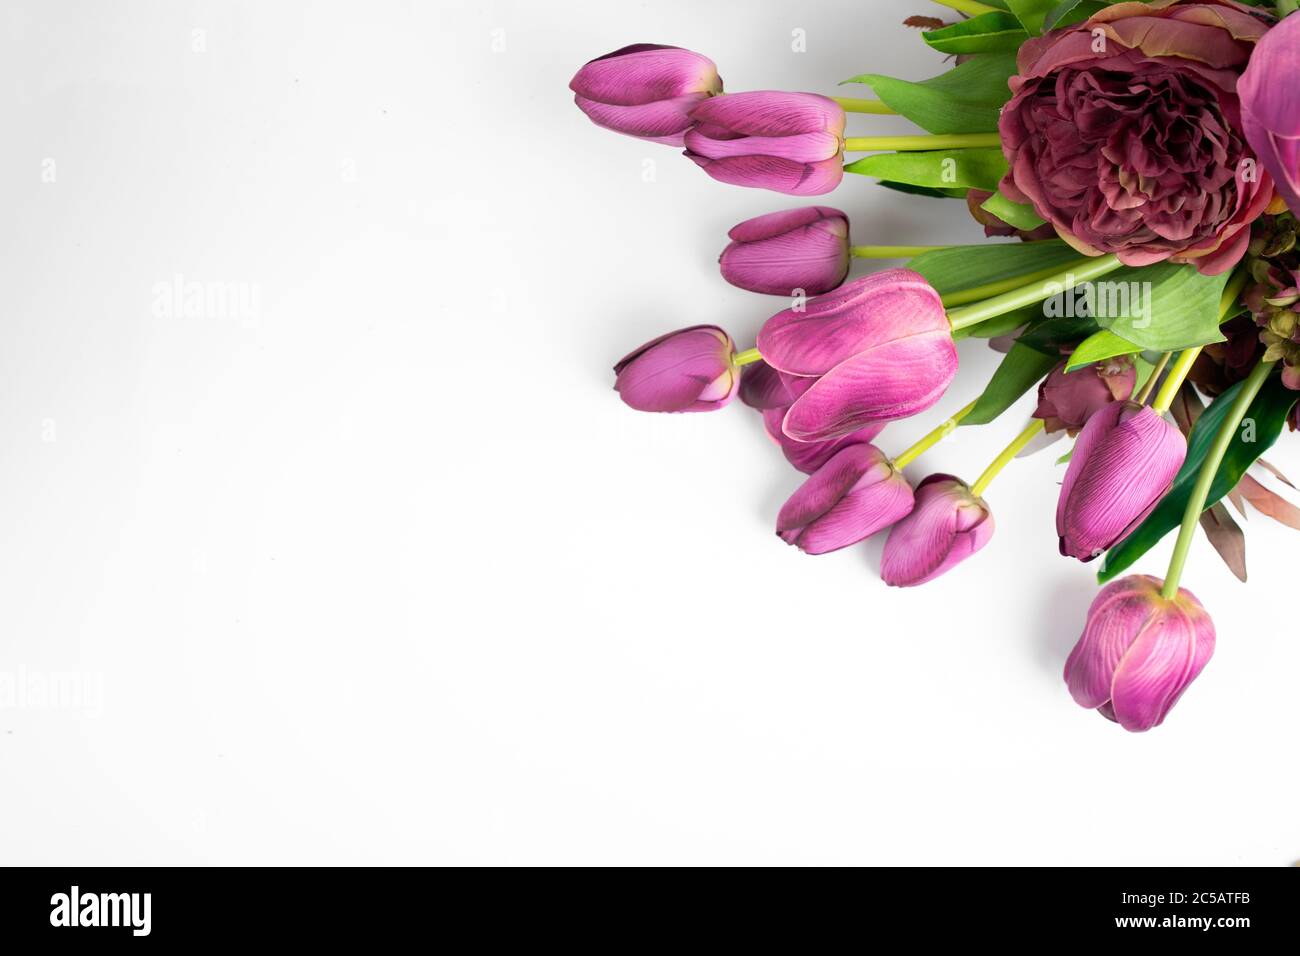 Flores de tulipanes de color púrpura fresco arreglo de ramo sobre un fondo blanco Foto de stock